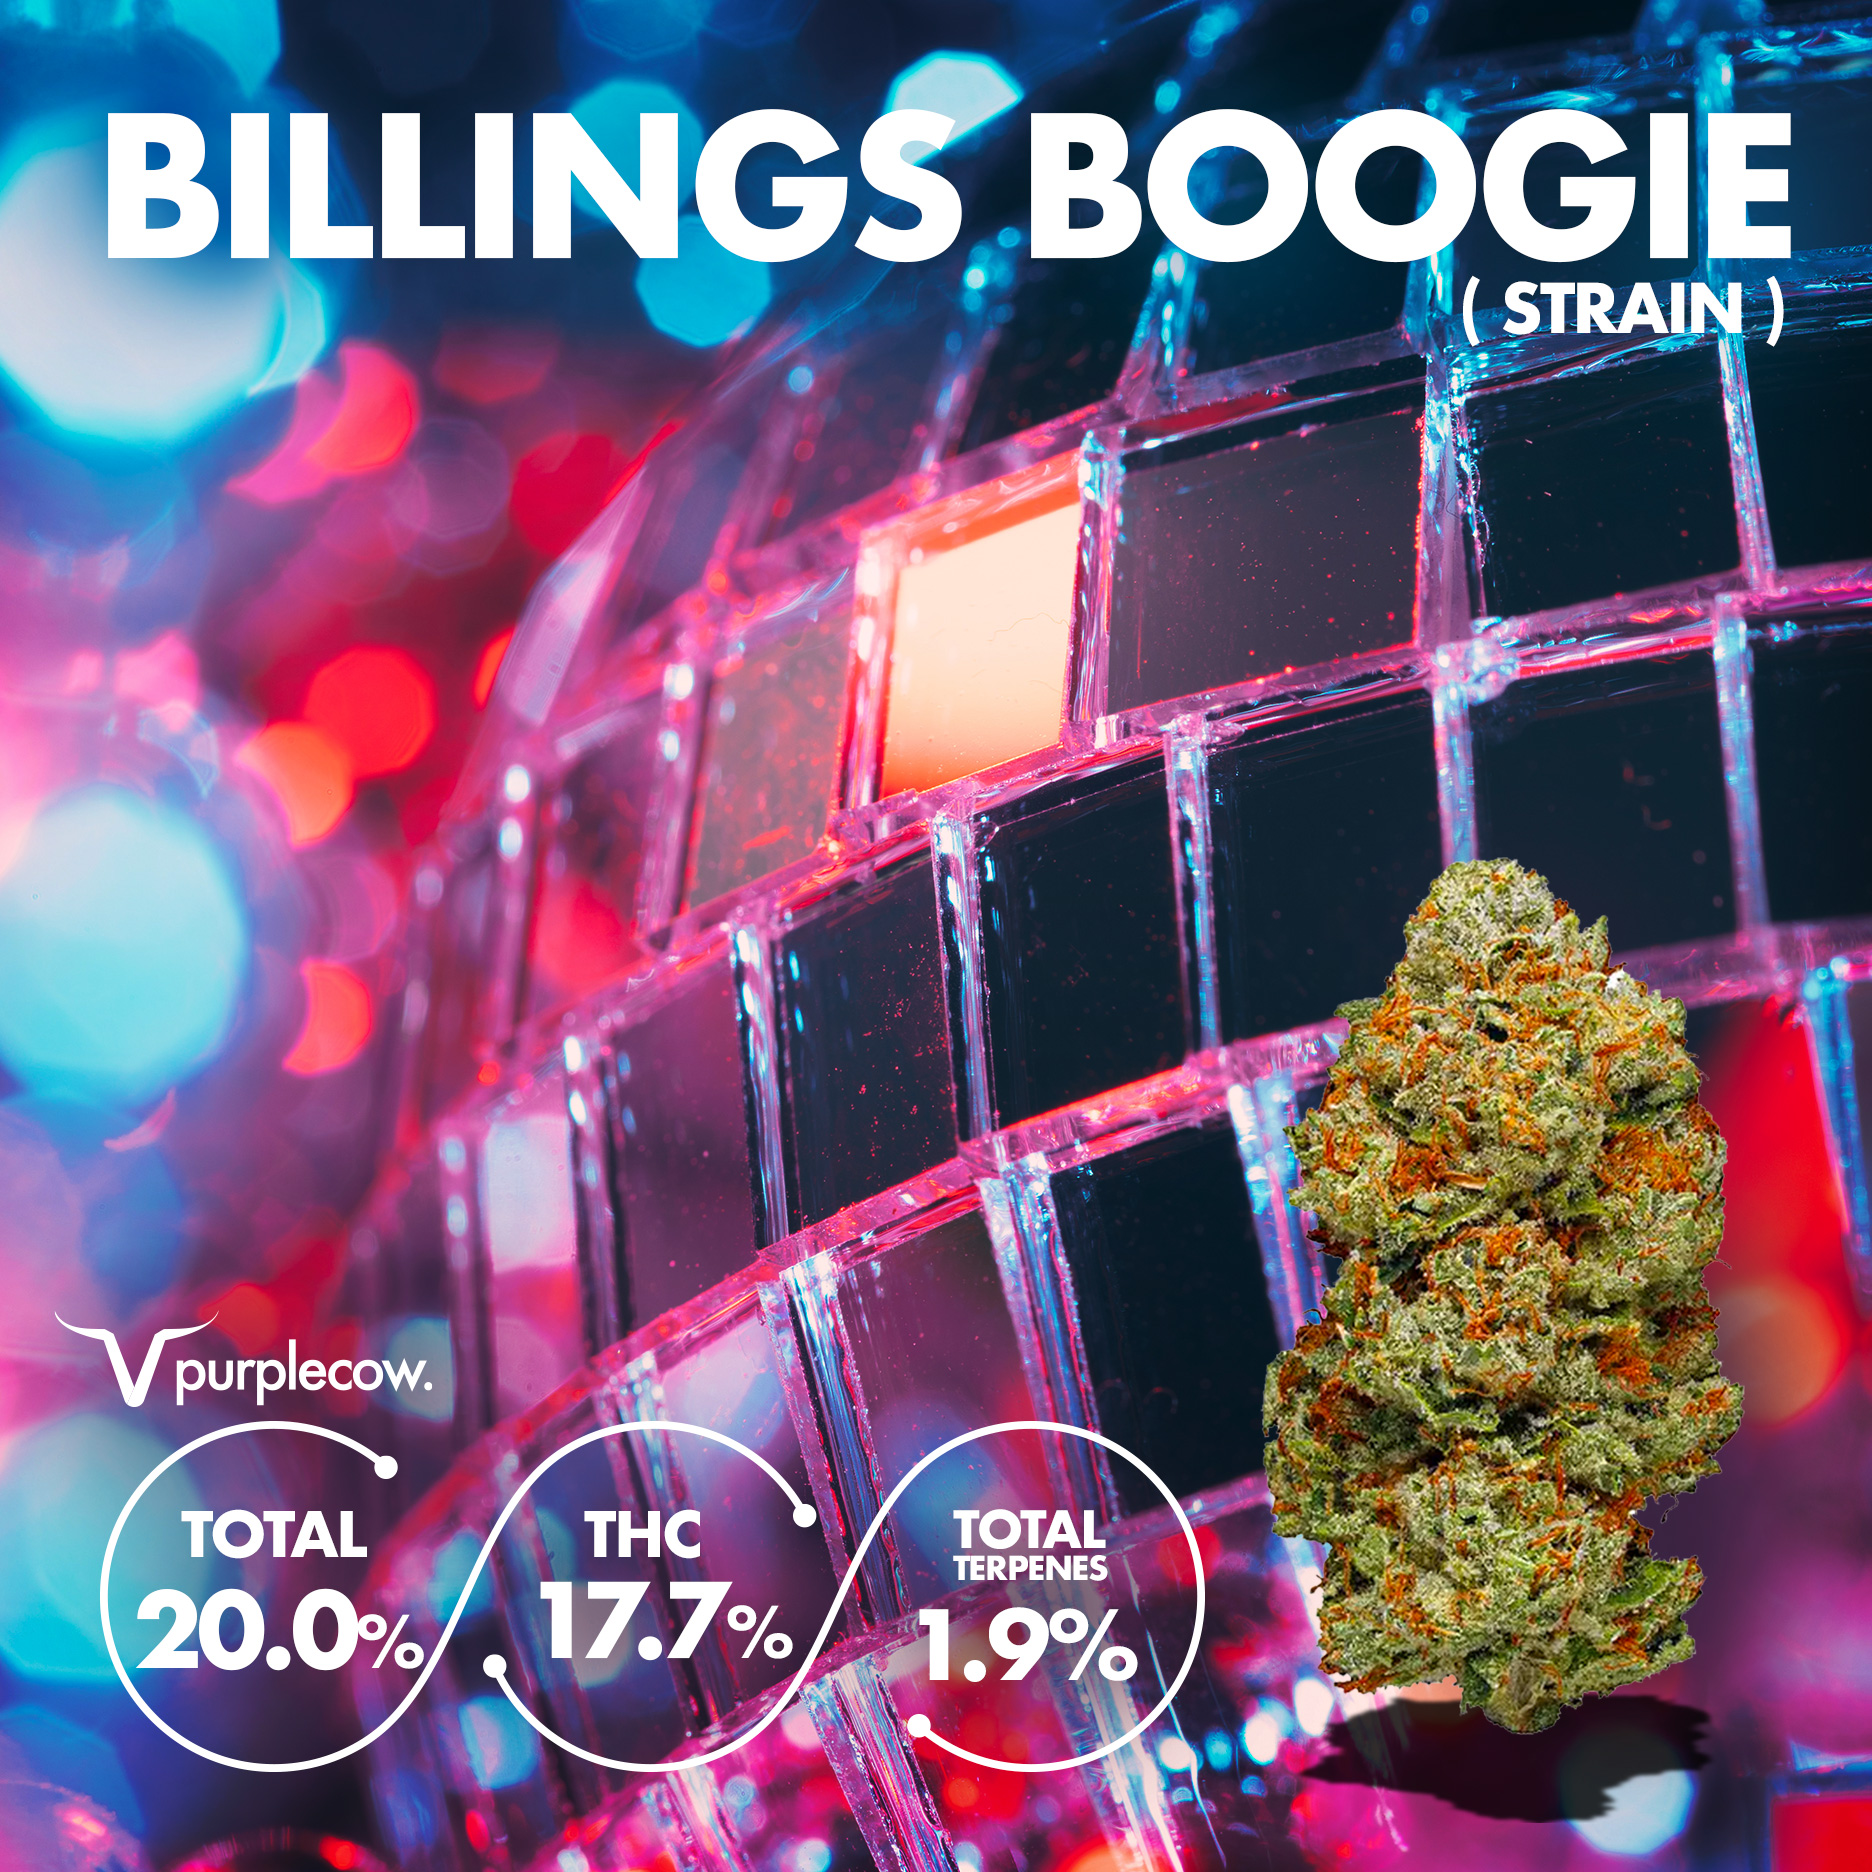 Billings Boogie